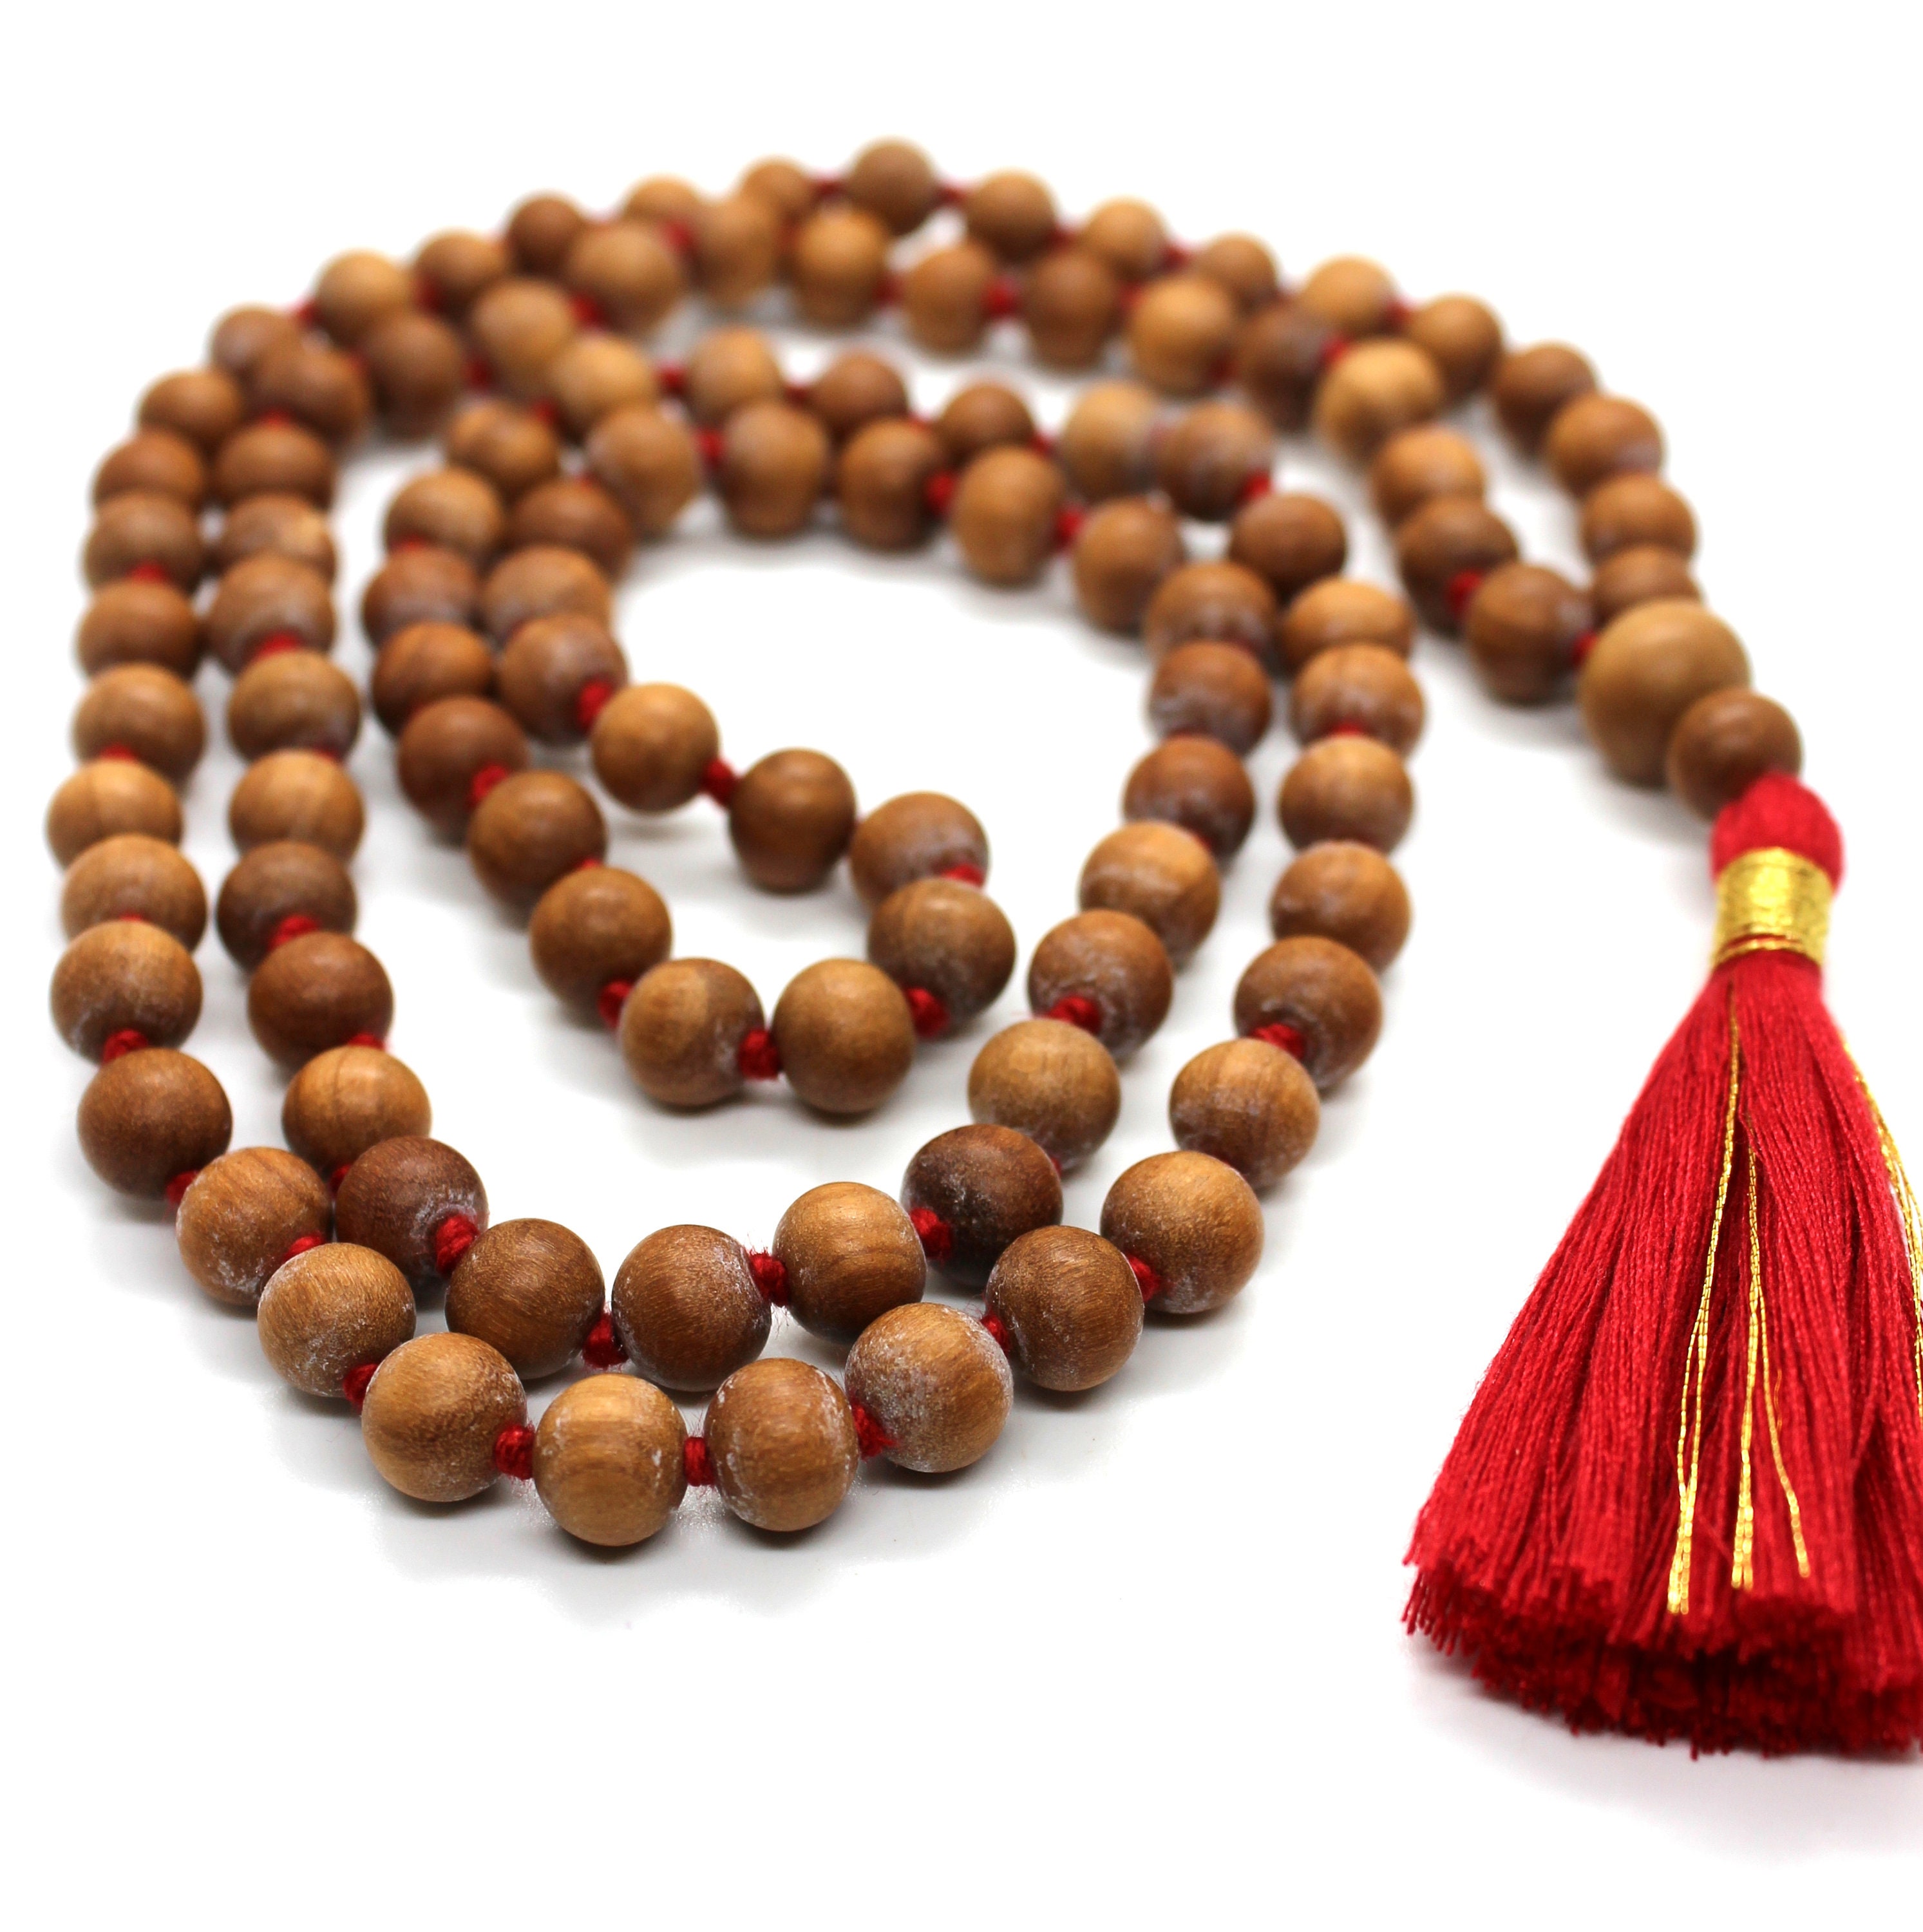 Mala Beads – The Garden of Light